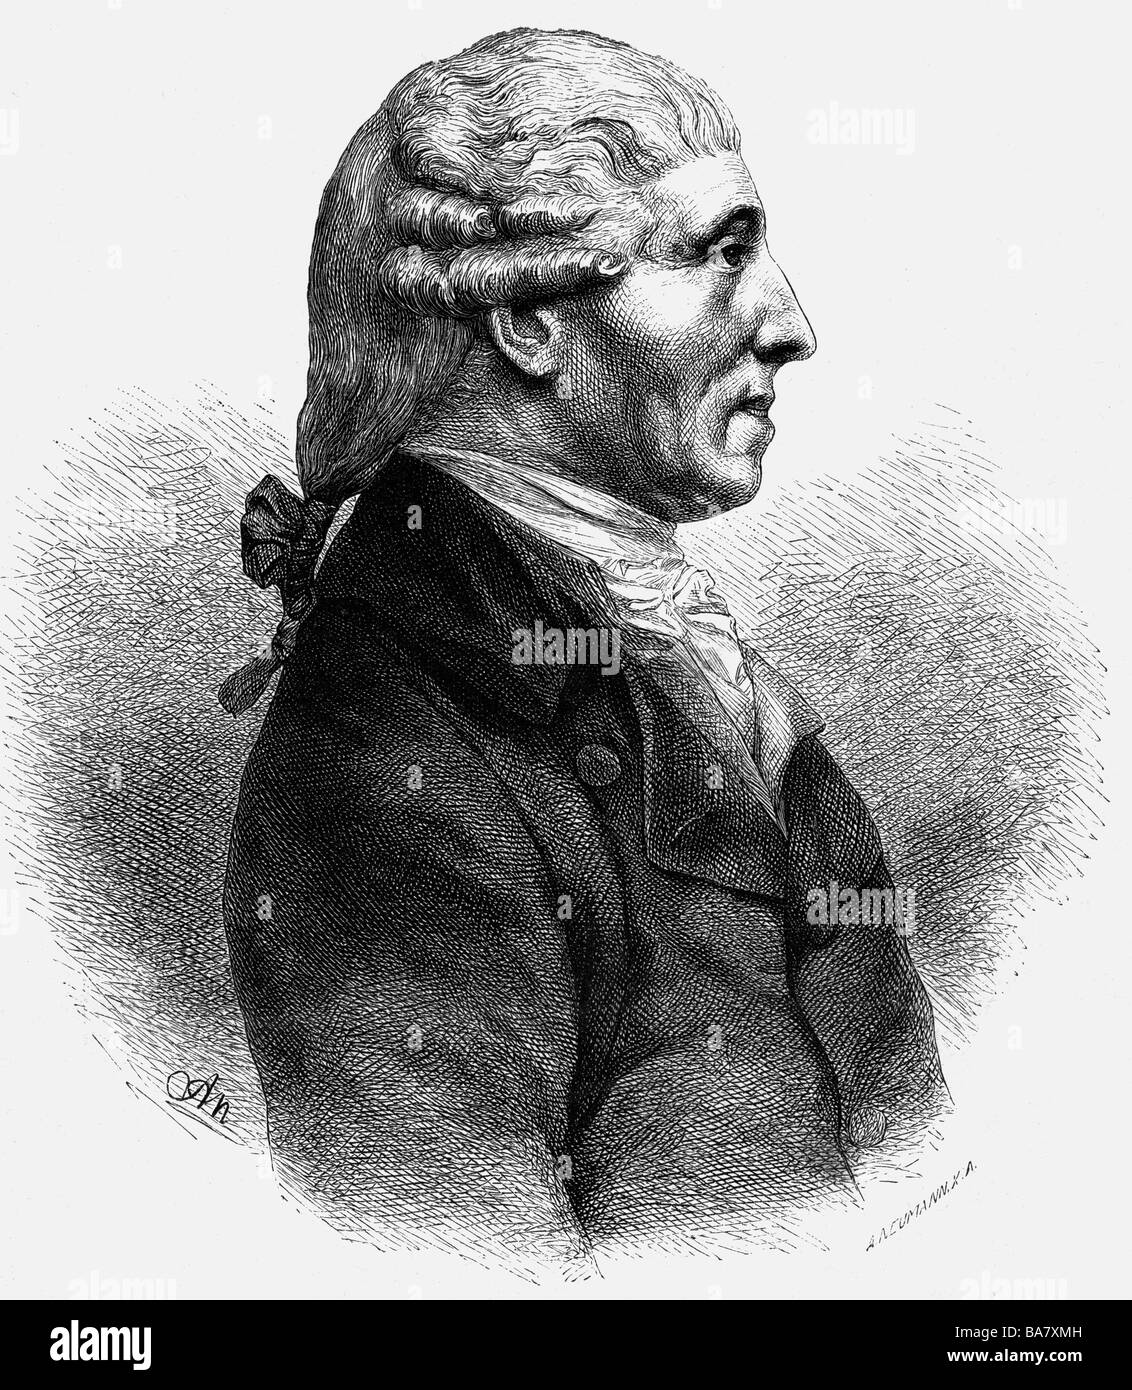 Haydn, Joseph, 31.3.1732 - 31.5.1809, Austrian composer, portrait, wood engraving by Adolf Neumann, 19th century, , Stock Photo